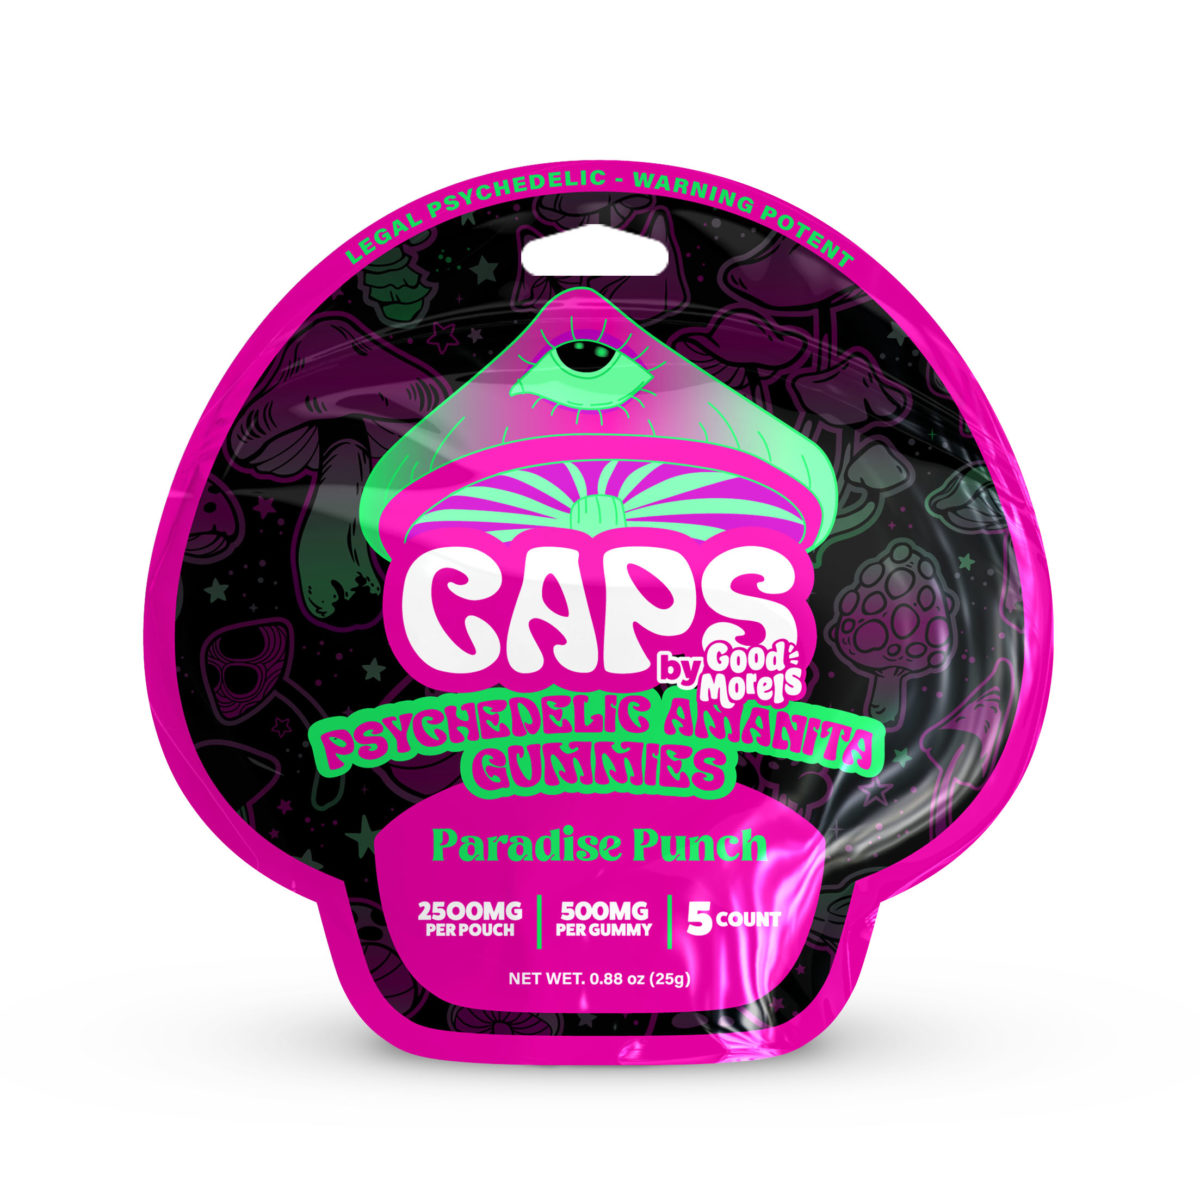 CAPS Psychedelic Amanita Gummies – Paradise Punch